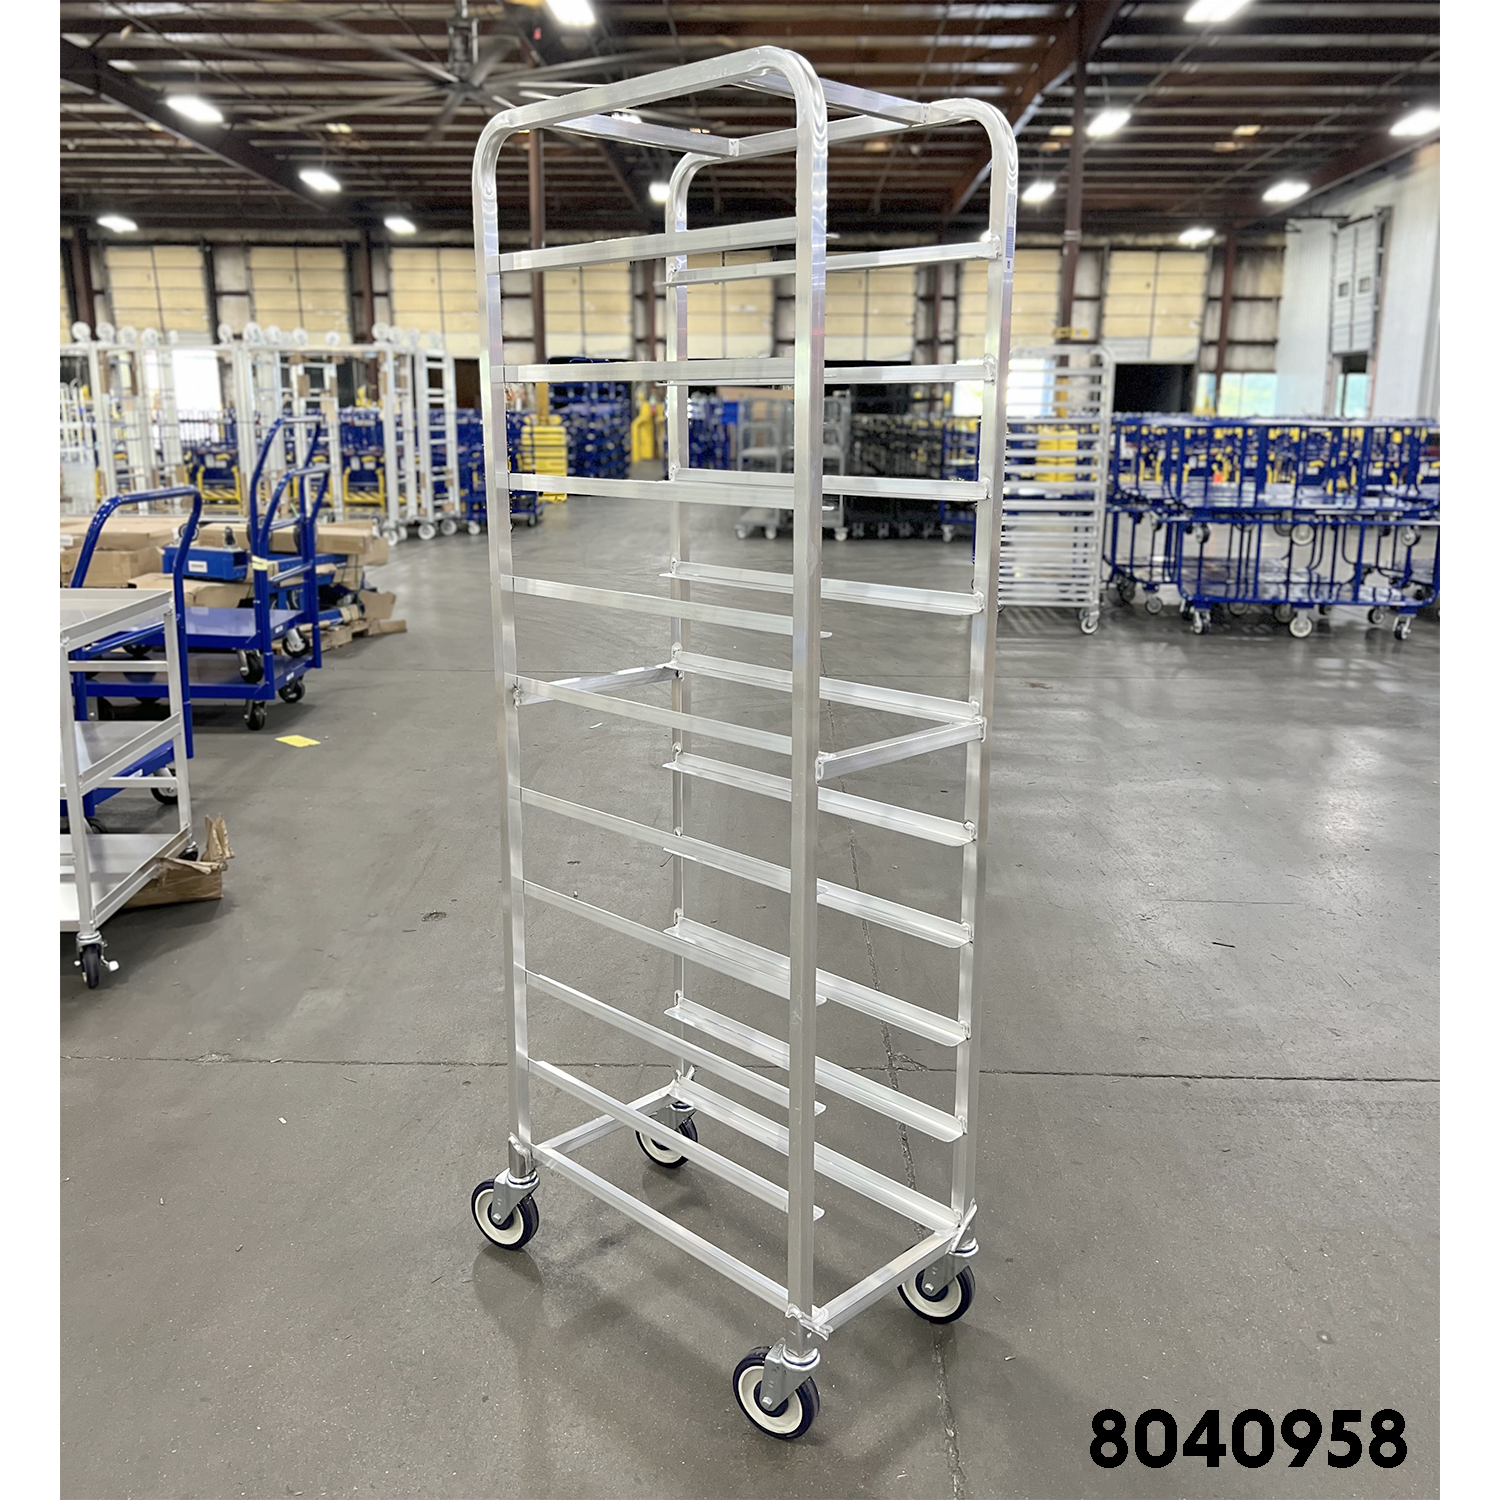 Aluminum End Loading Pan Racks NSF certification bakery cart kitchen cart restaurant cart grocery cart